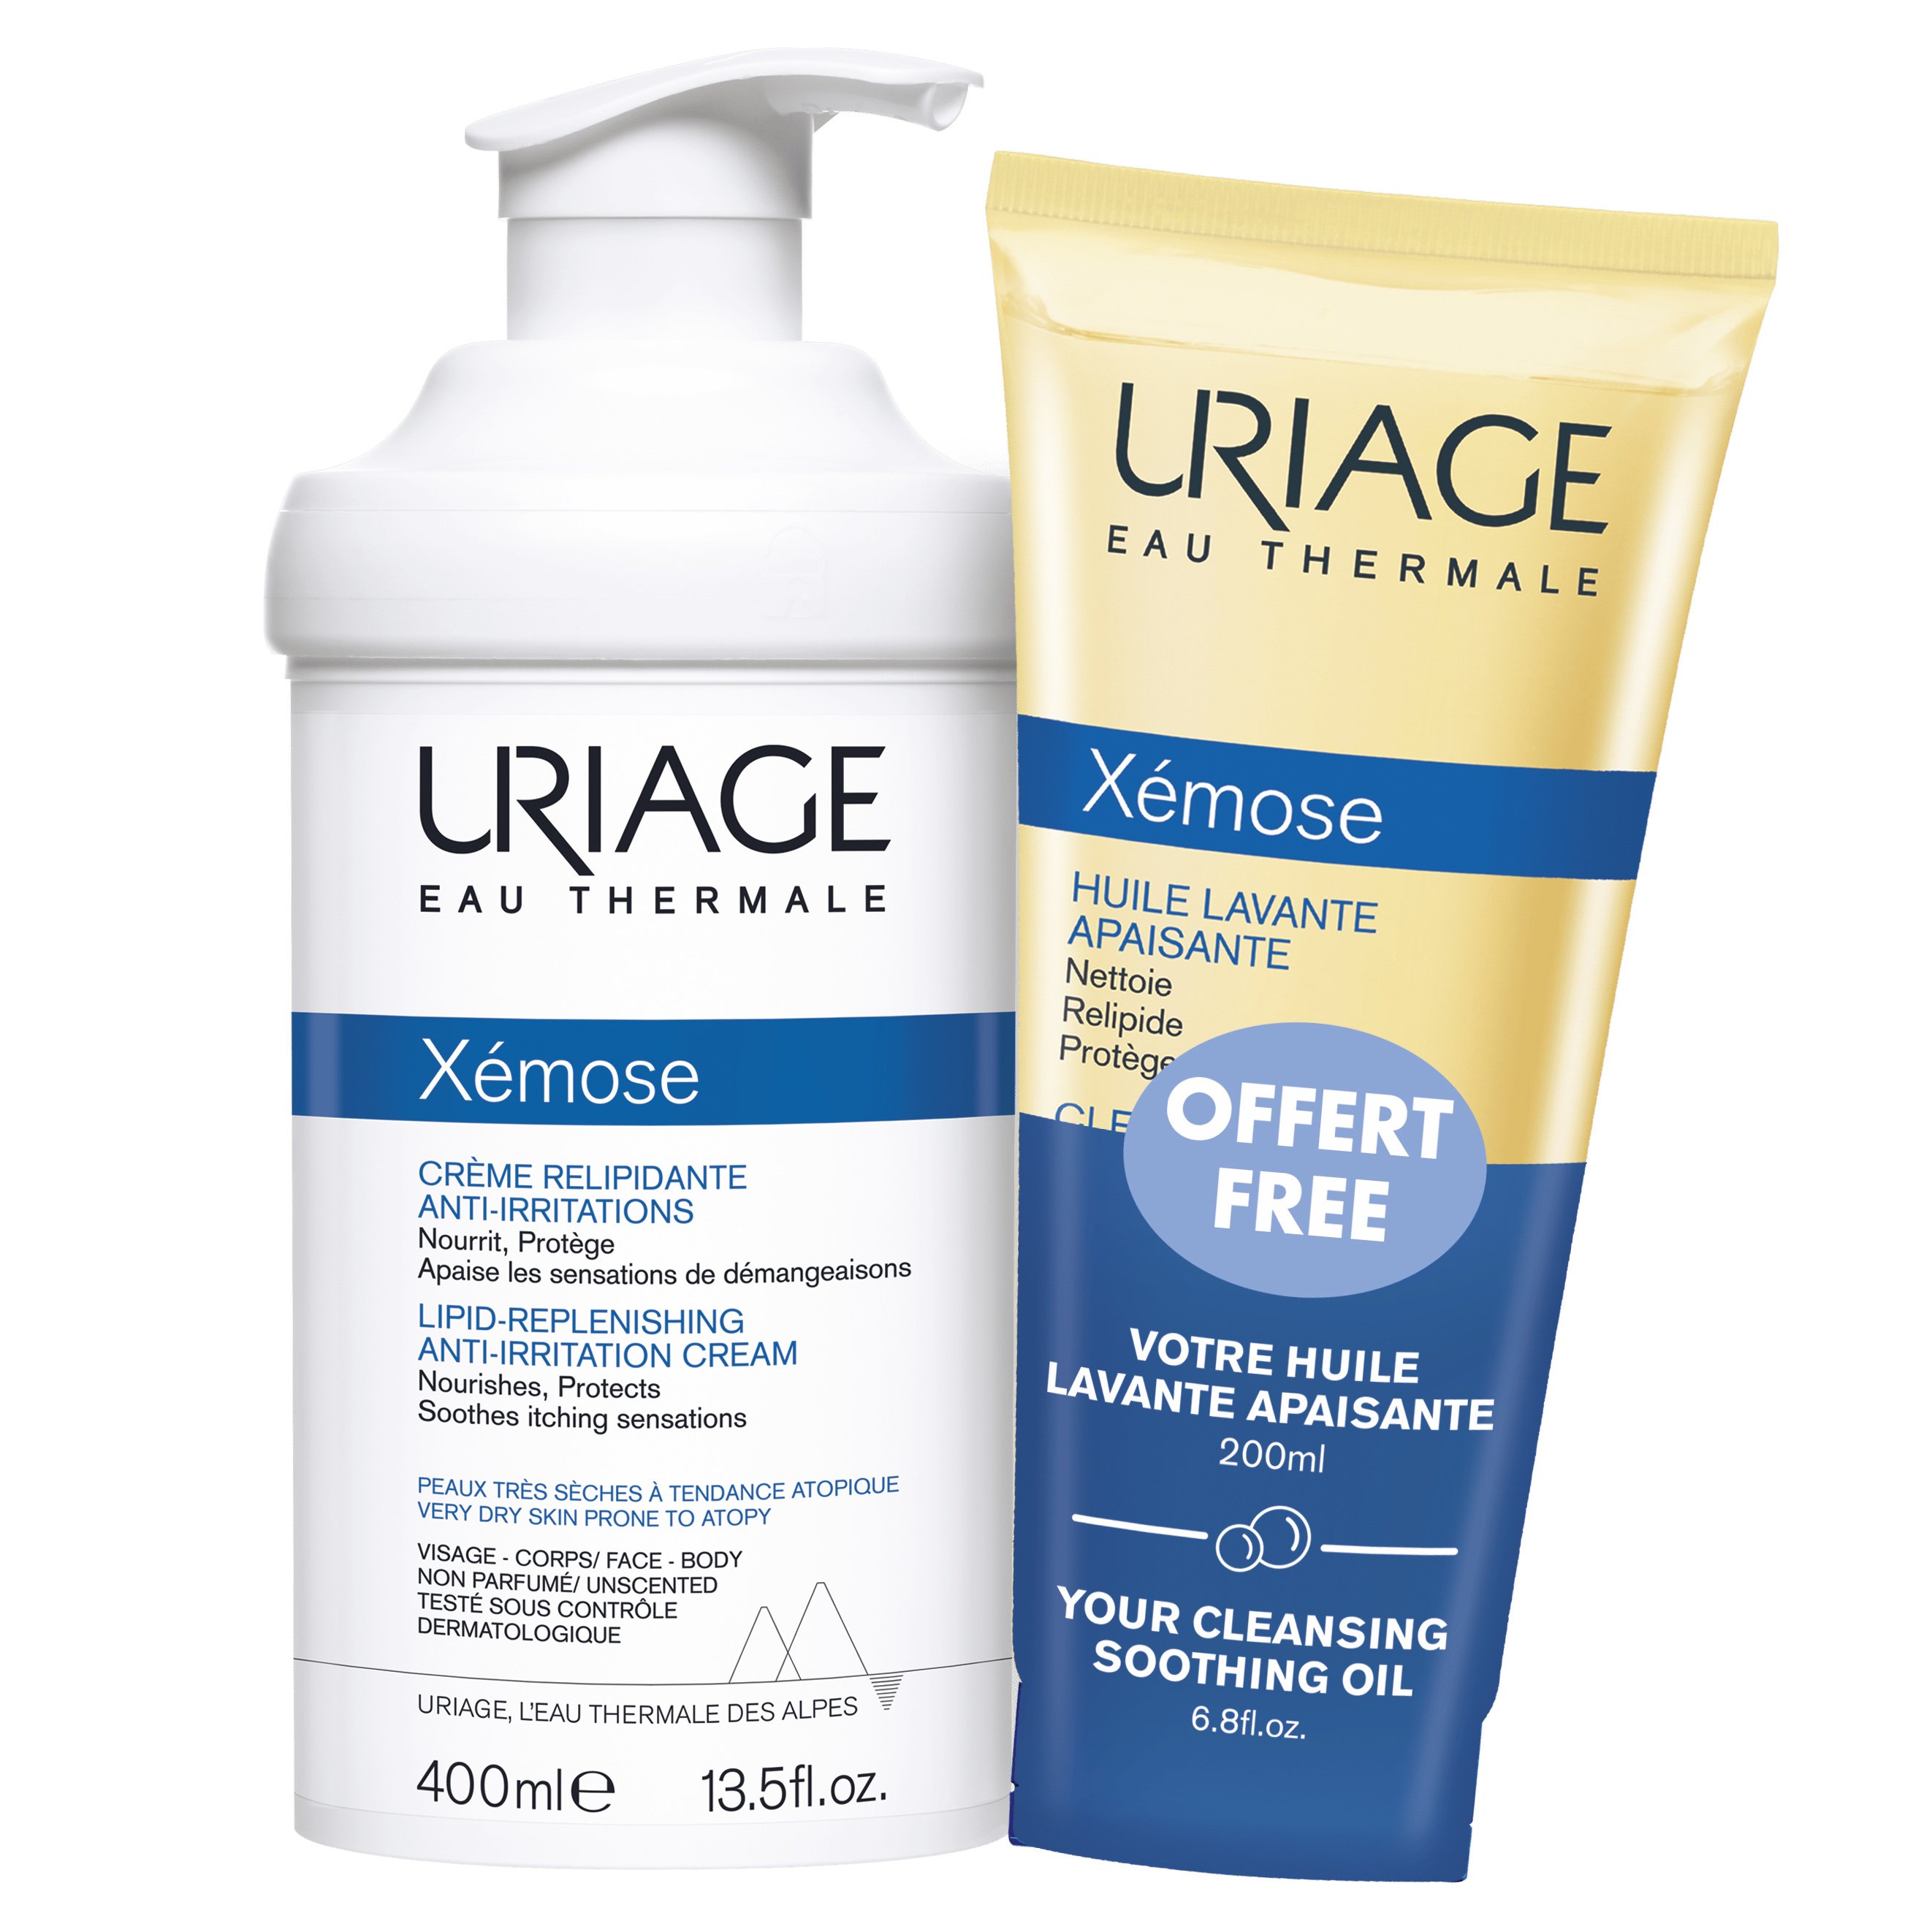 Uriage Promo Eau Thermale Xemose Lipid-Replenishing Anti-Irritation Cream 400ml & Xemose Cleansing Soothing Oil 200ml